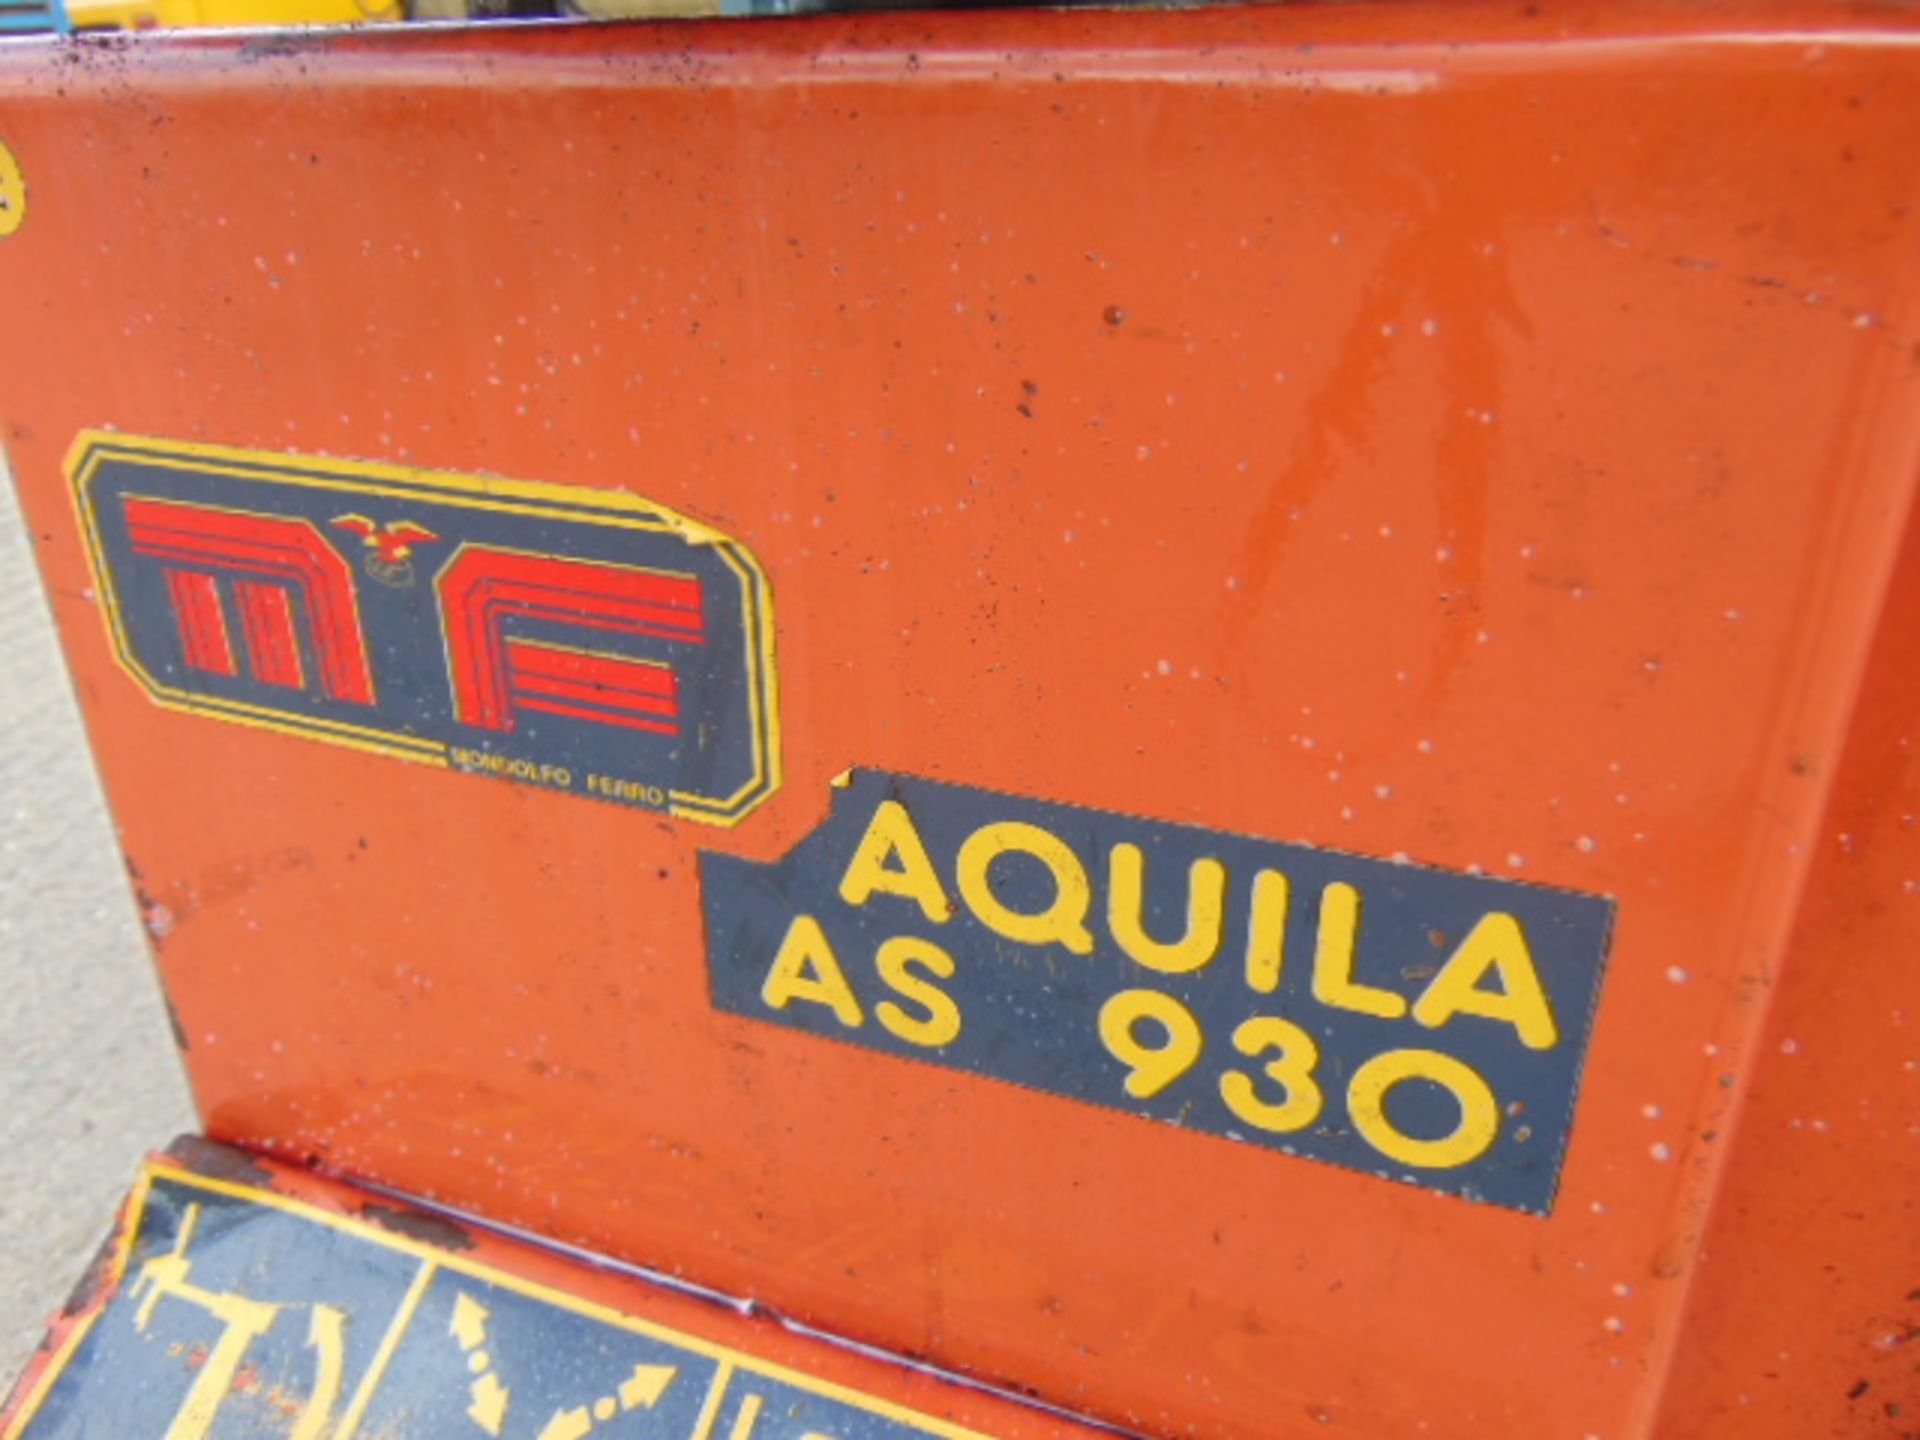 Mondolfo Ferro Aquila AS 930 Tyre changing Machine - Image 16 of 17